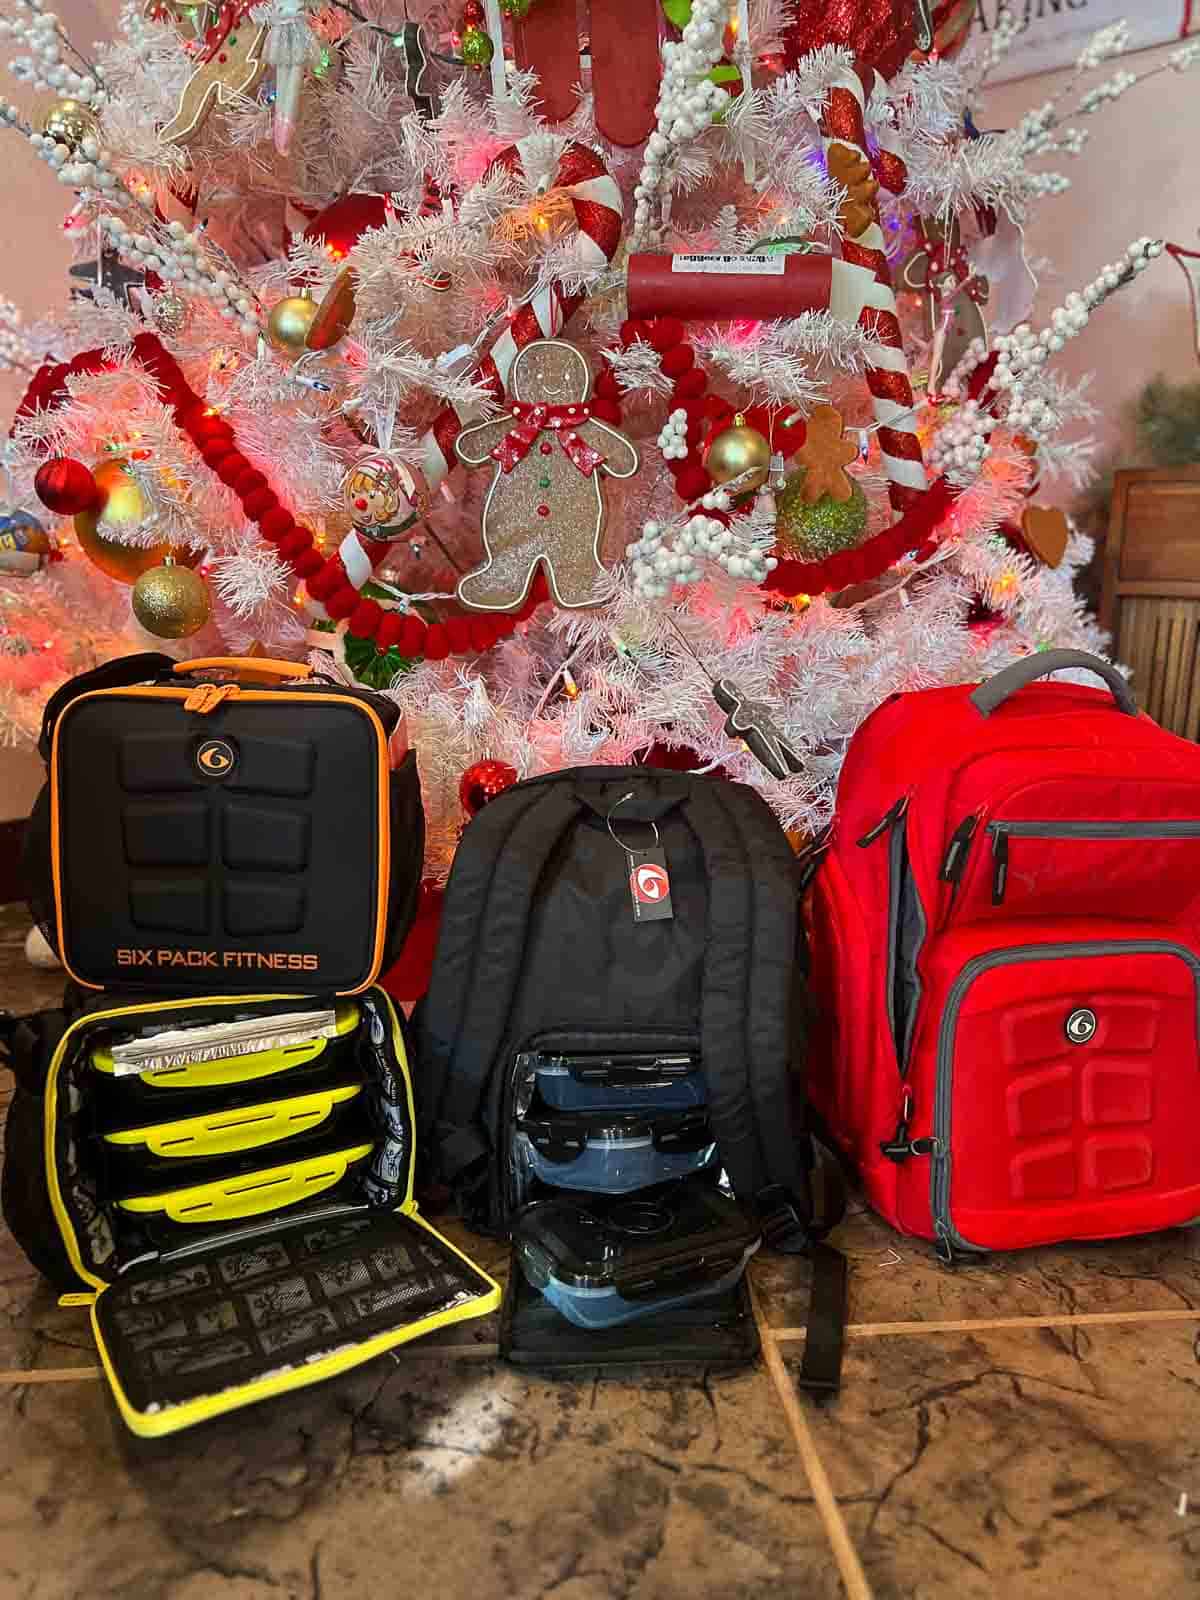 6 Pack Bags near Christmas tree